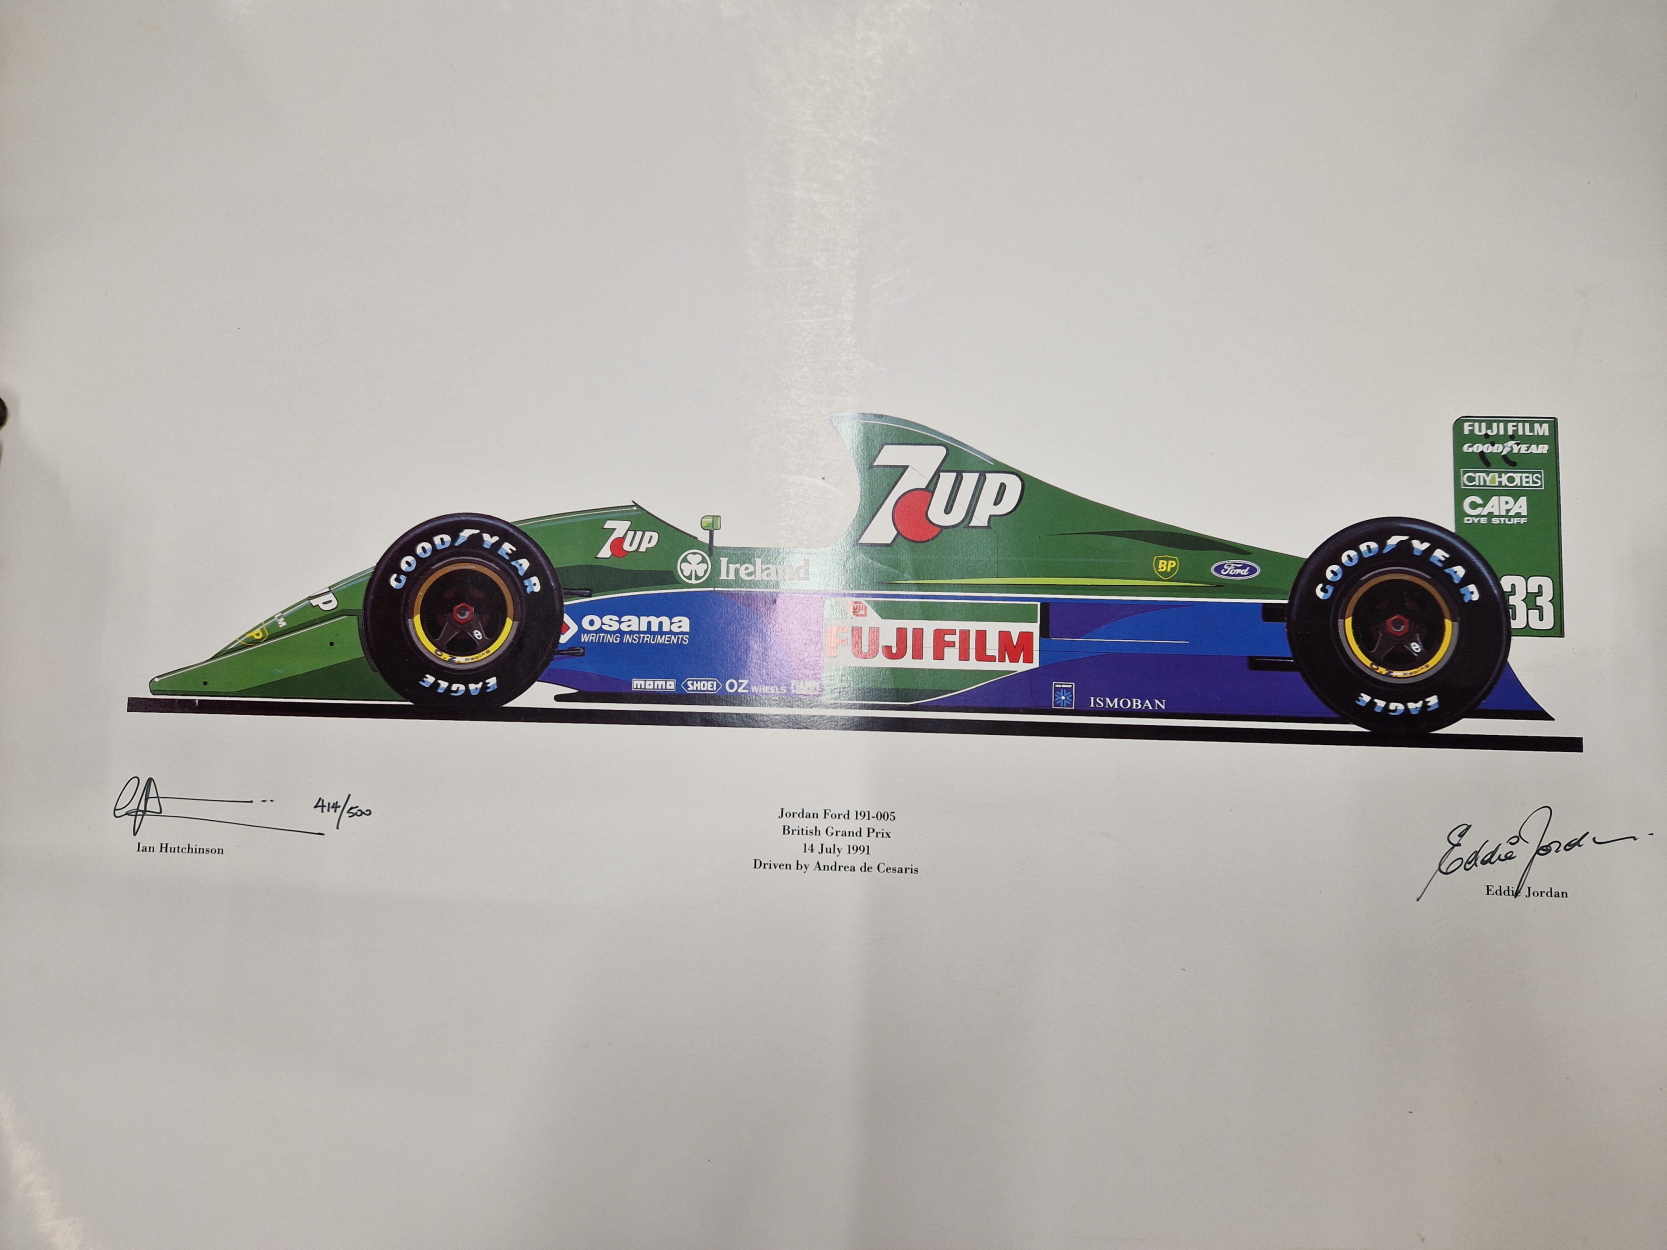 JORDAN FORMULA 1 RACING 1991 PRINT SIGNED BY EDDIE JORDAN AND THE ARTIST IAN HUTCHINSON . LTD